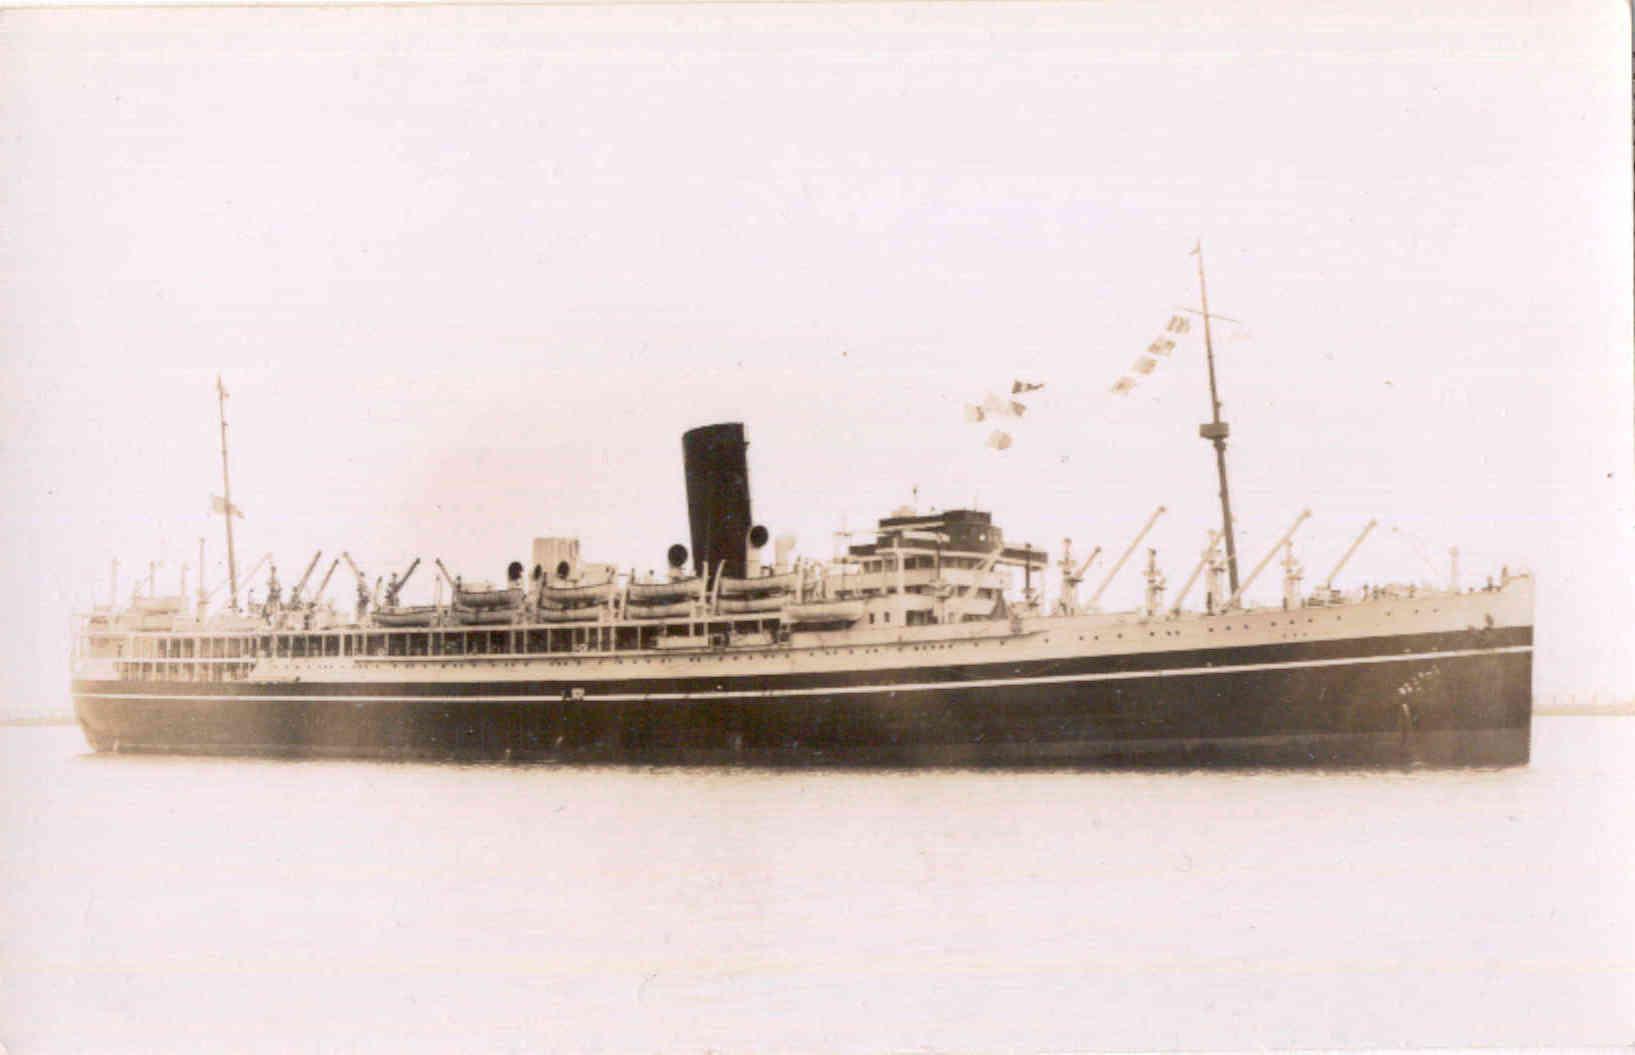 1925 Passenger vessel